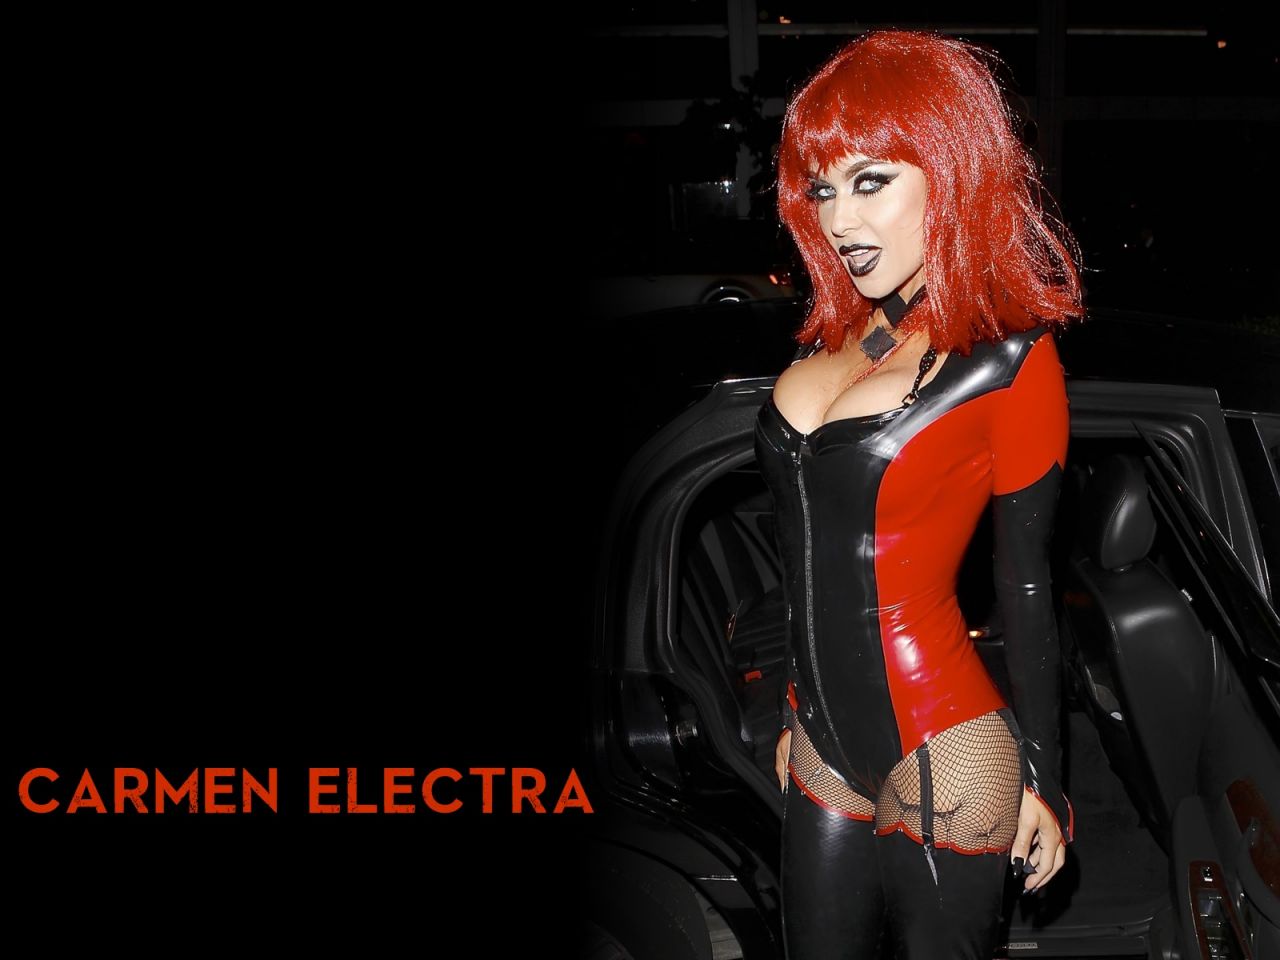 Carmen electra pornstar lookalike